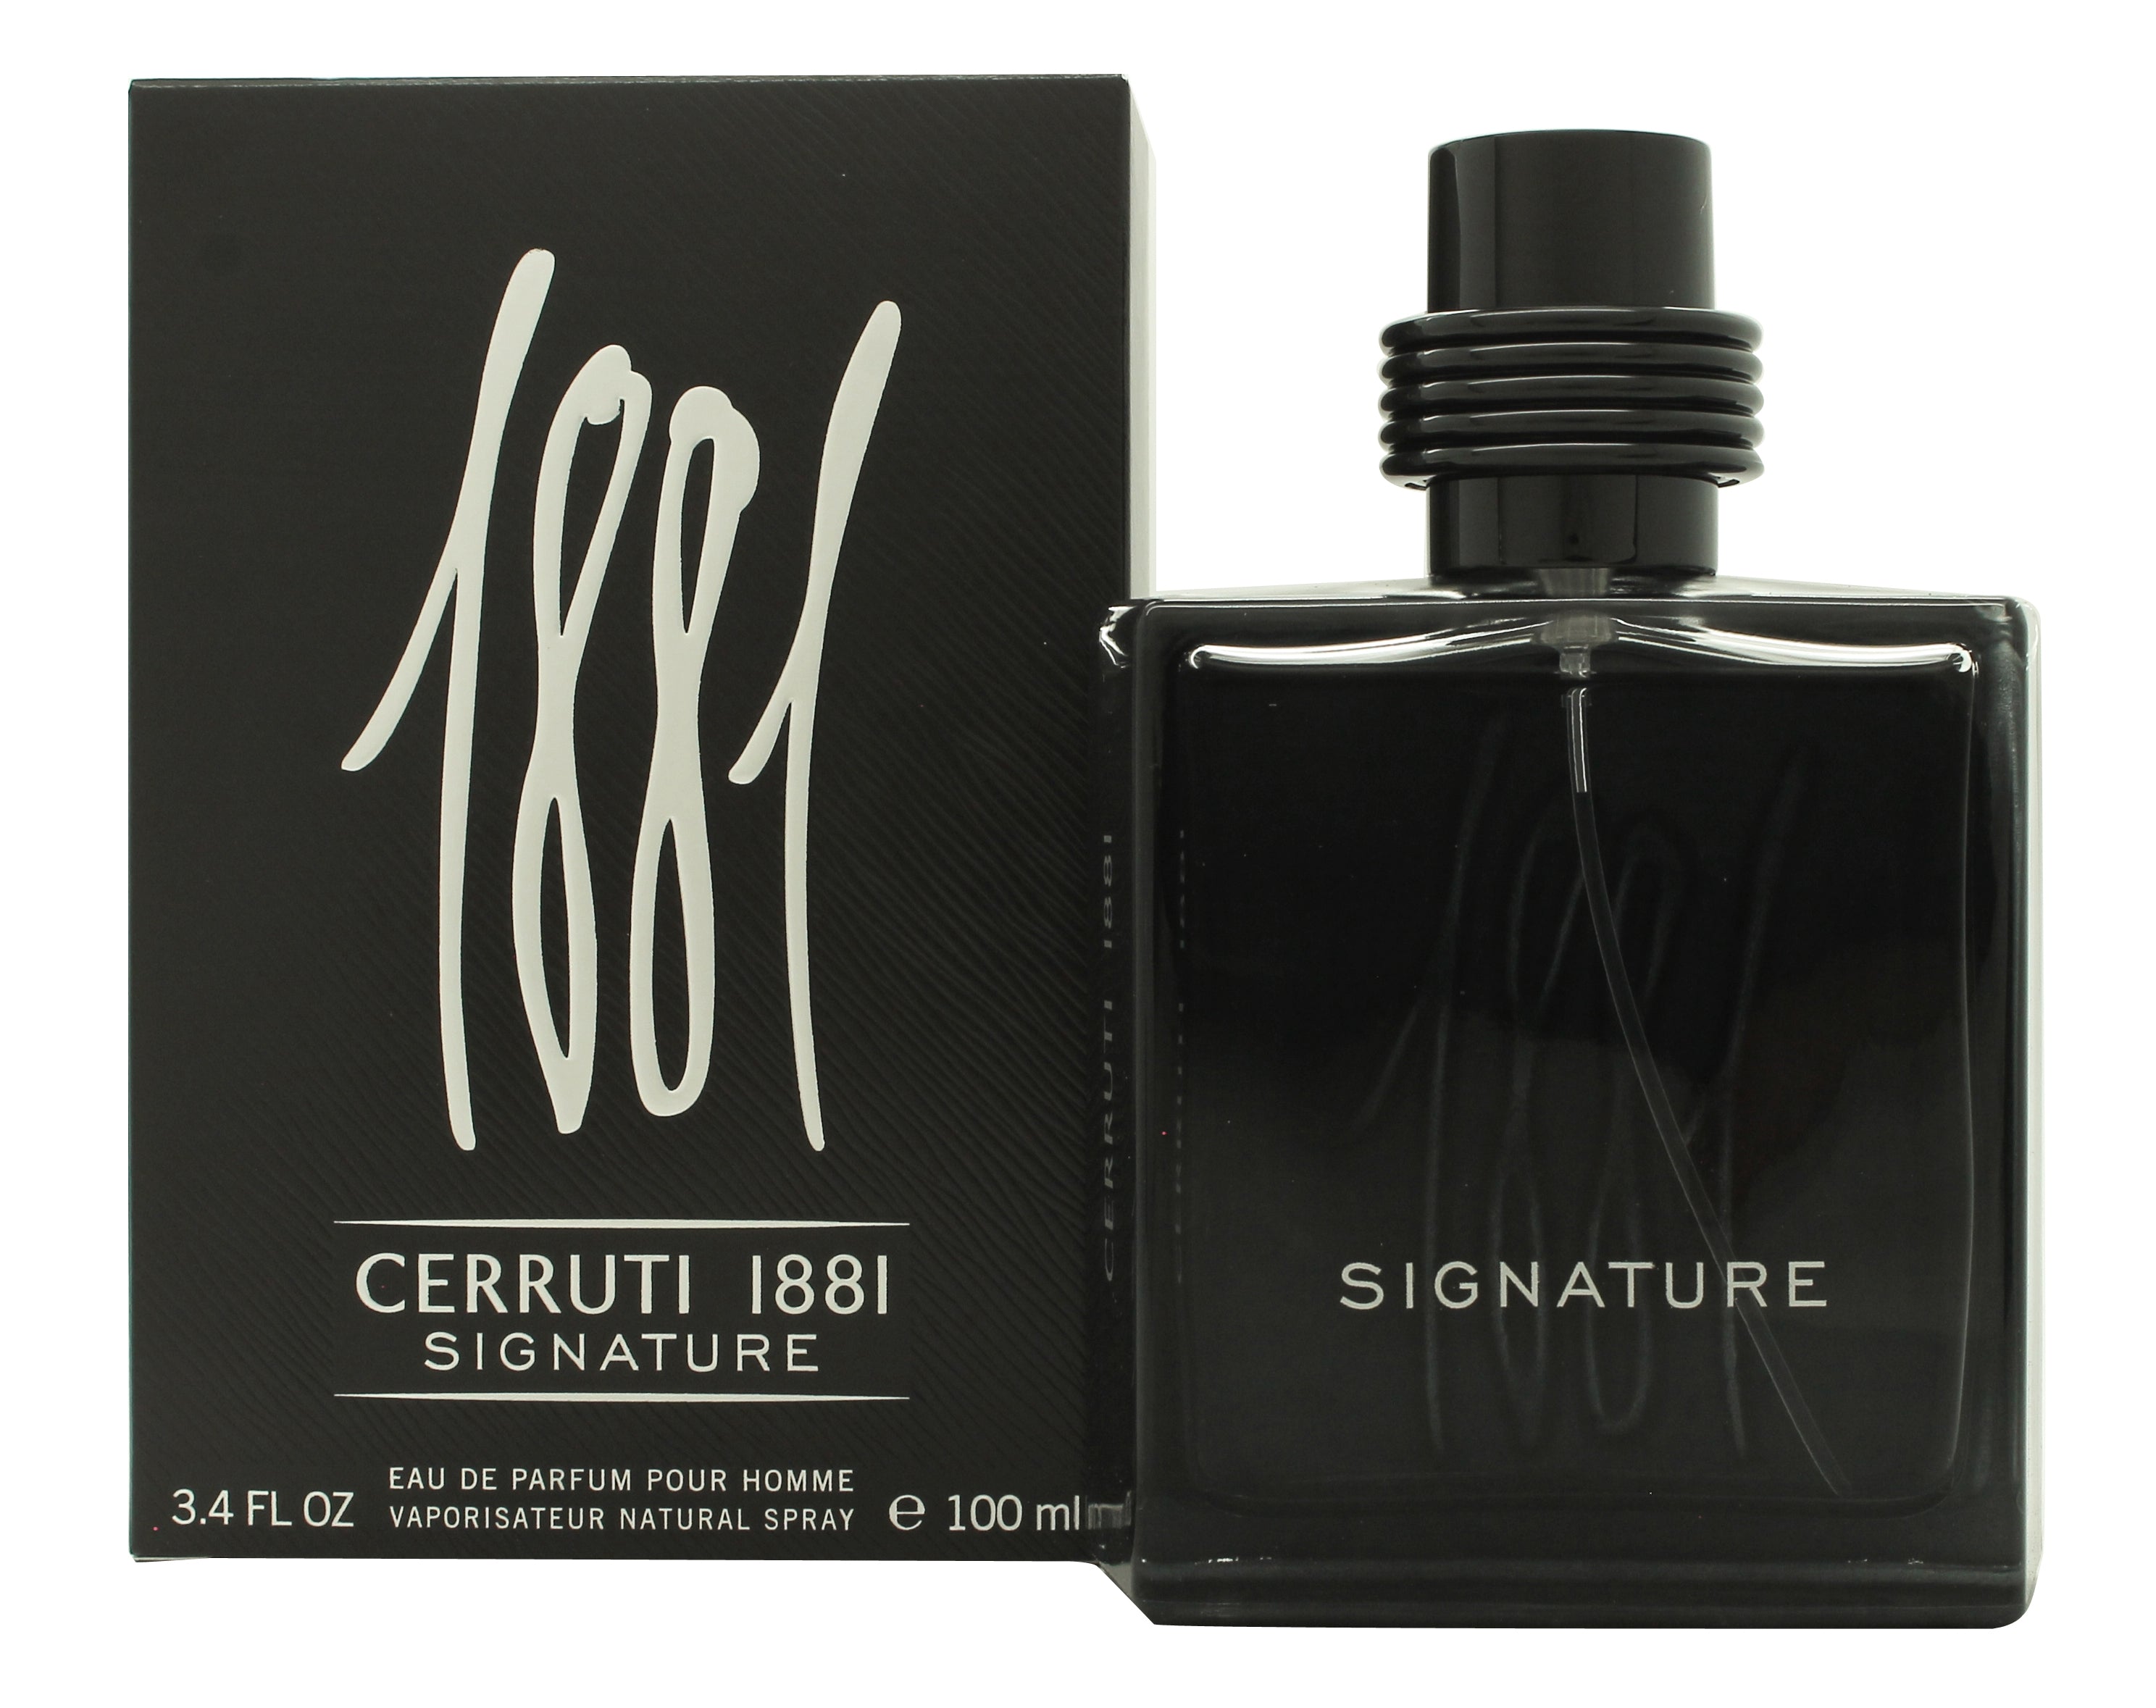 View Cerruti 1881 Signature Eau de Parfum 100ml Spray information